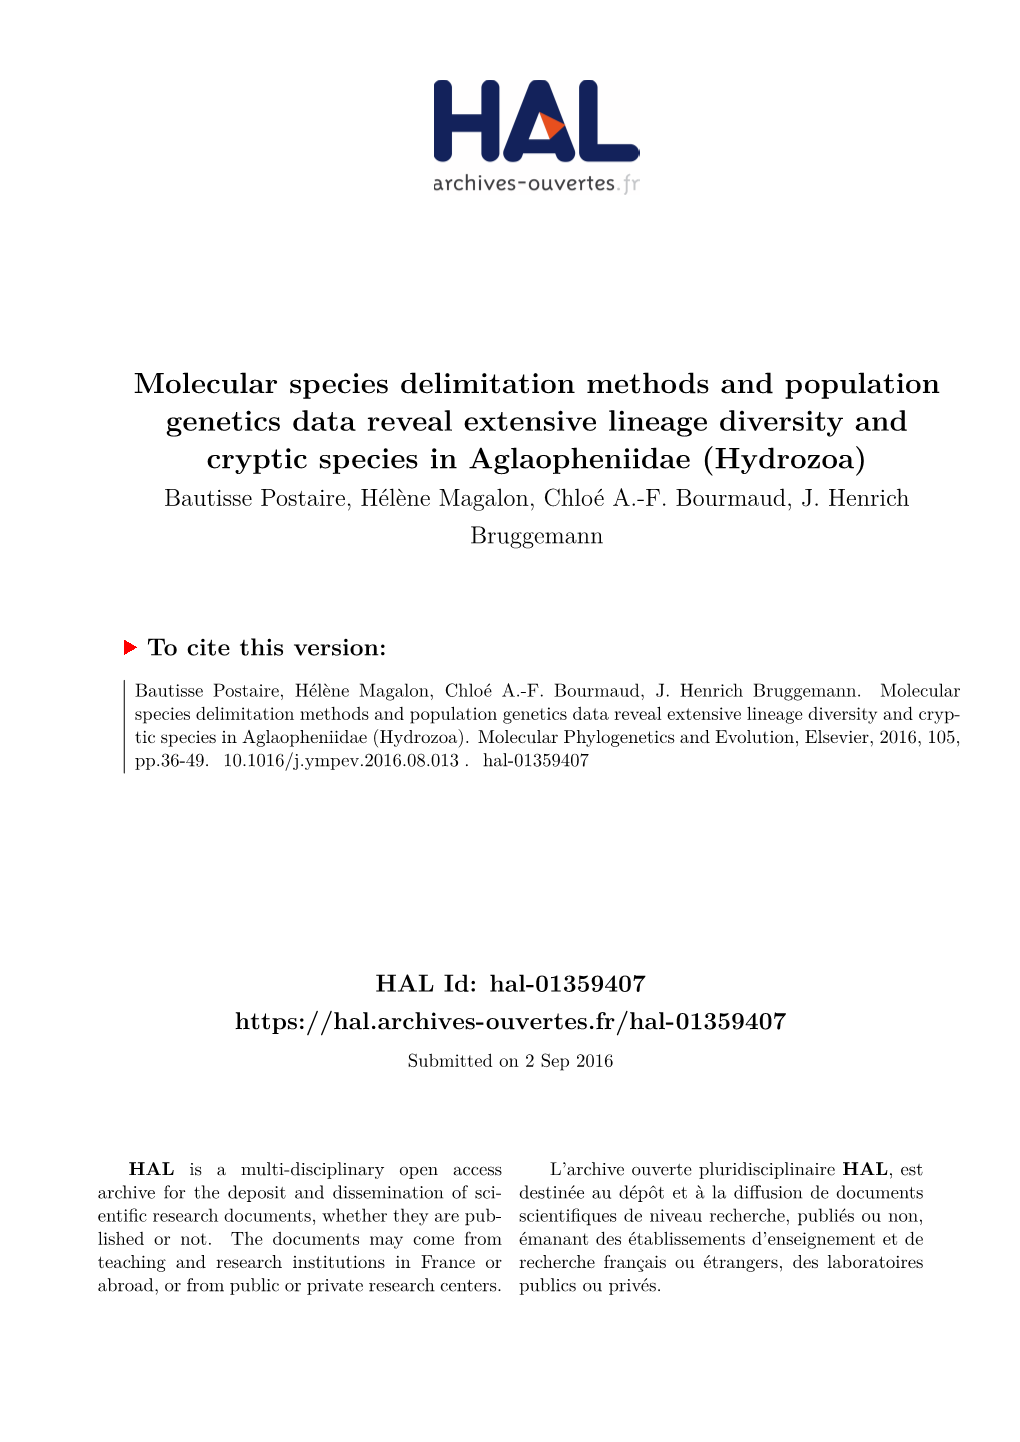 Molecular Species Delimitation Methods and Population Genetics